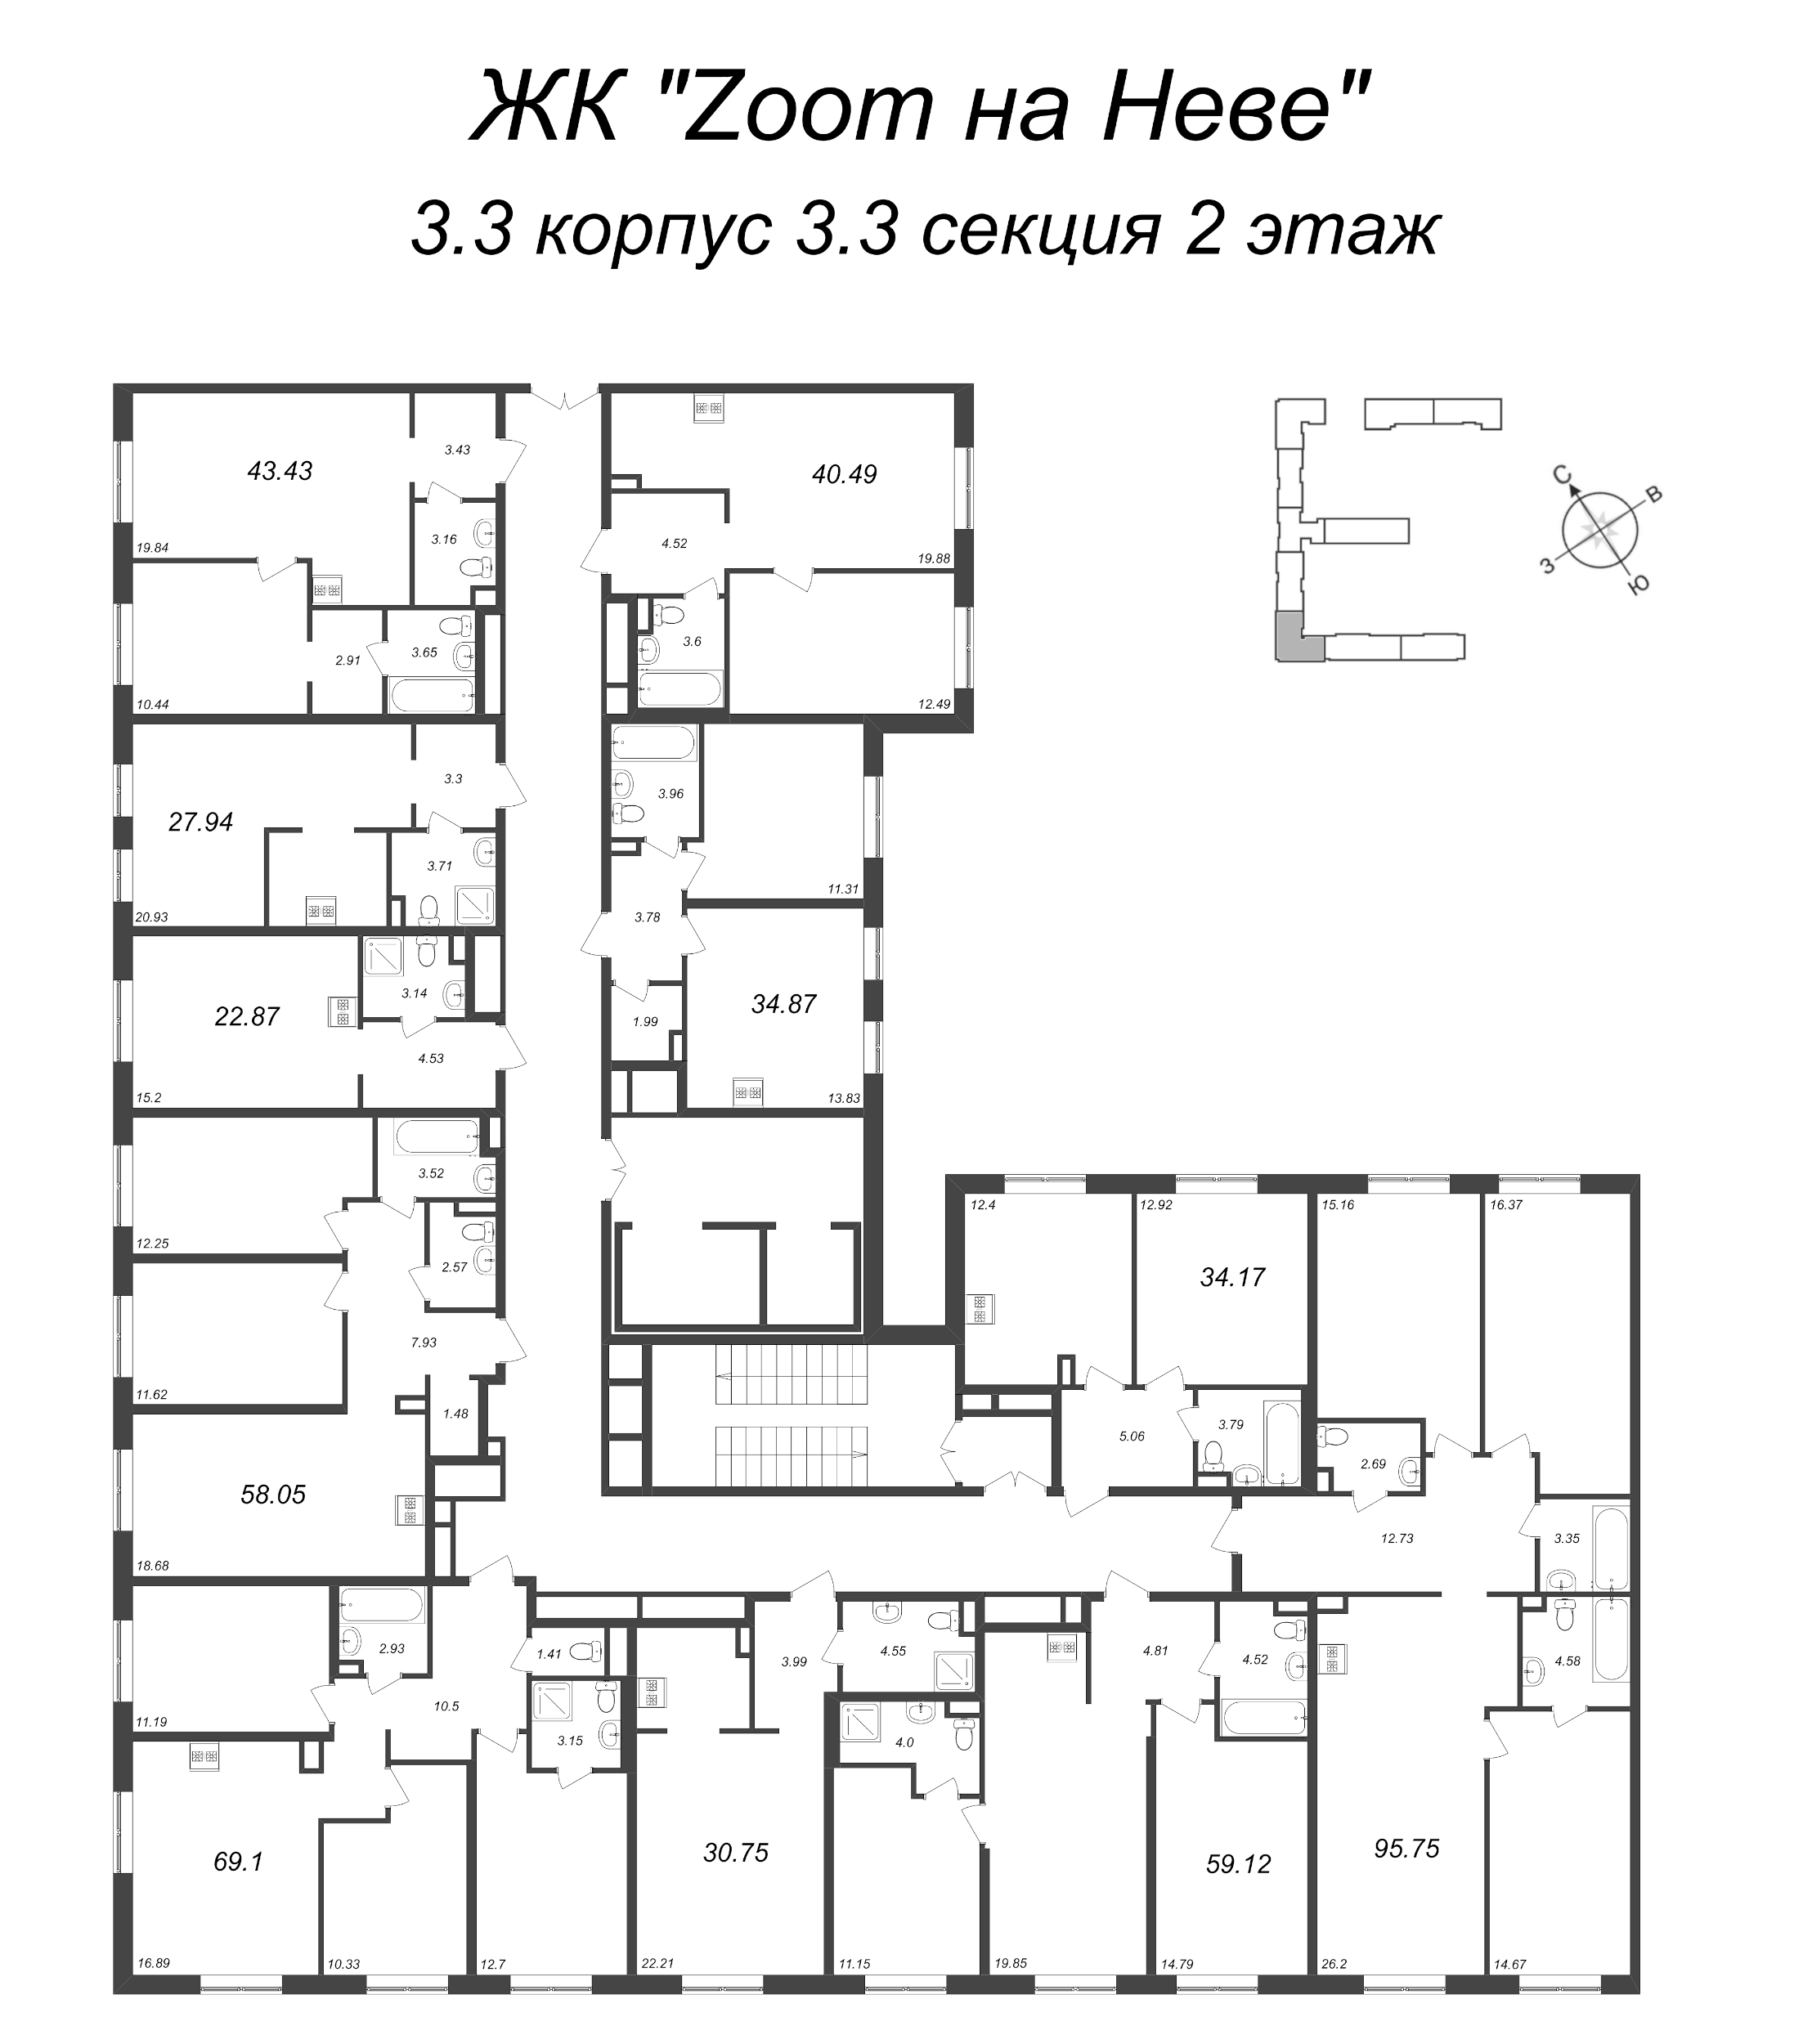 4-комнатная (Евро) квартира, 95.73 м² - планировка этажа